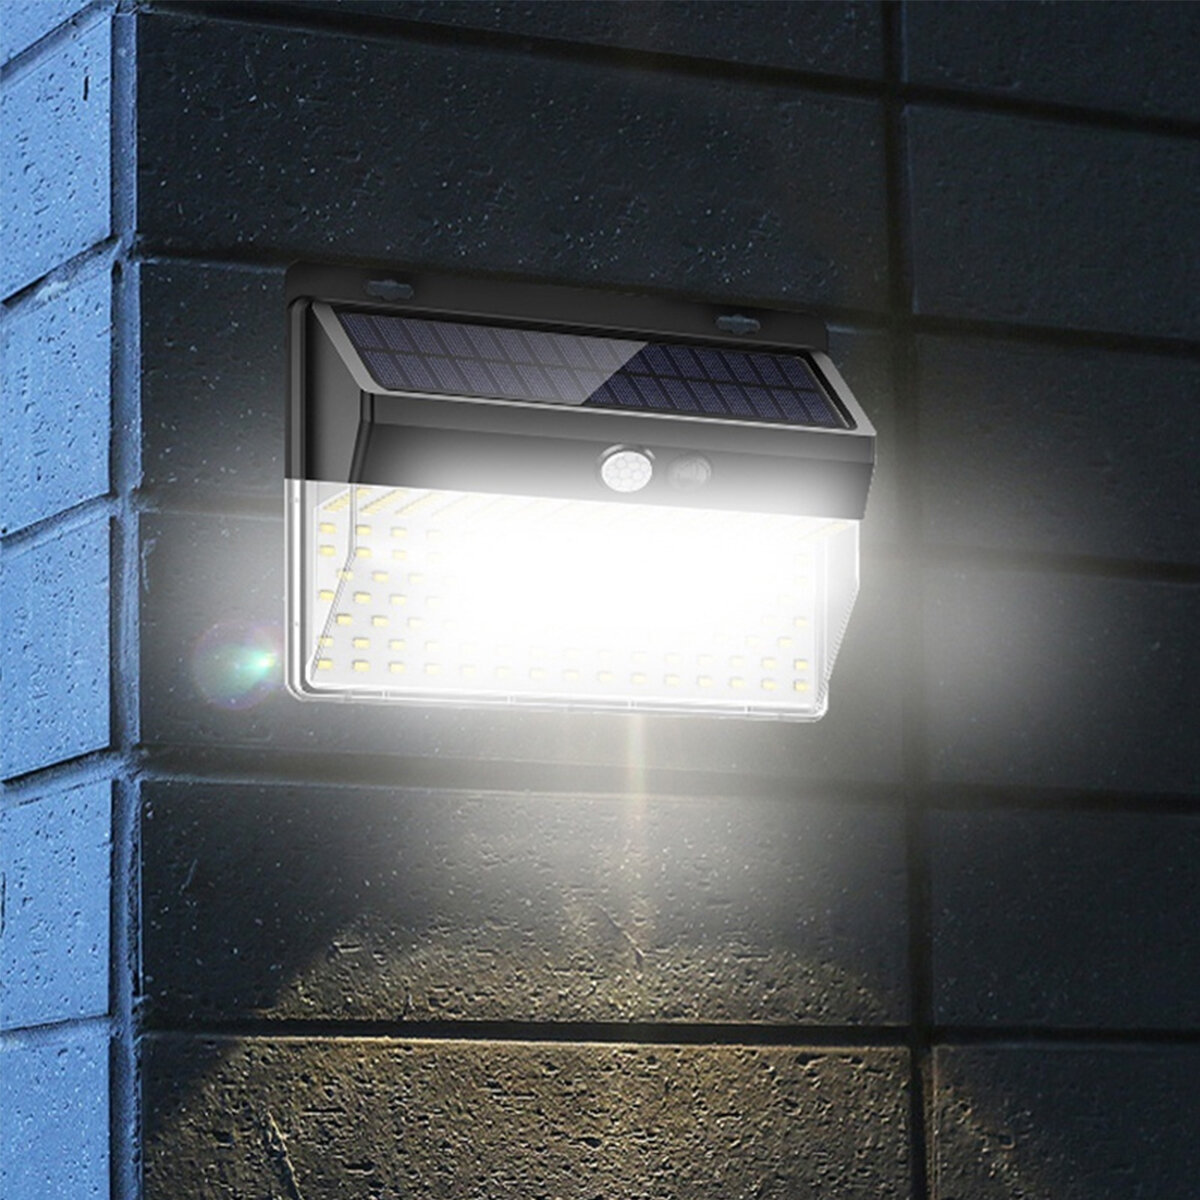 206 LED Solar Power PIR Motion Sensor Light Outdoor Garden Security Flood Lamp